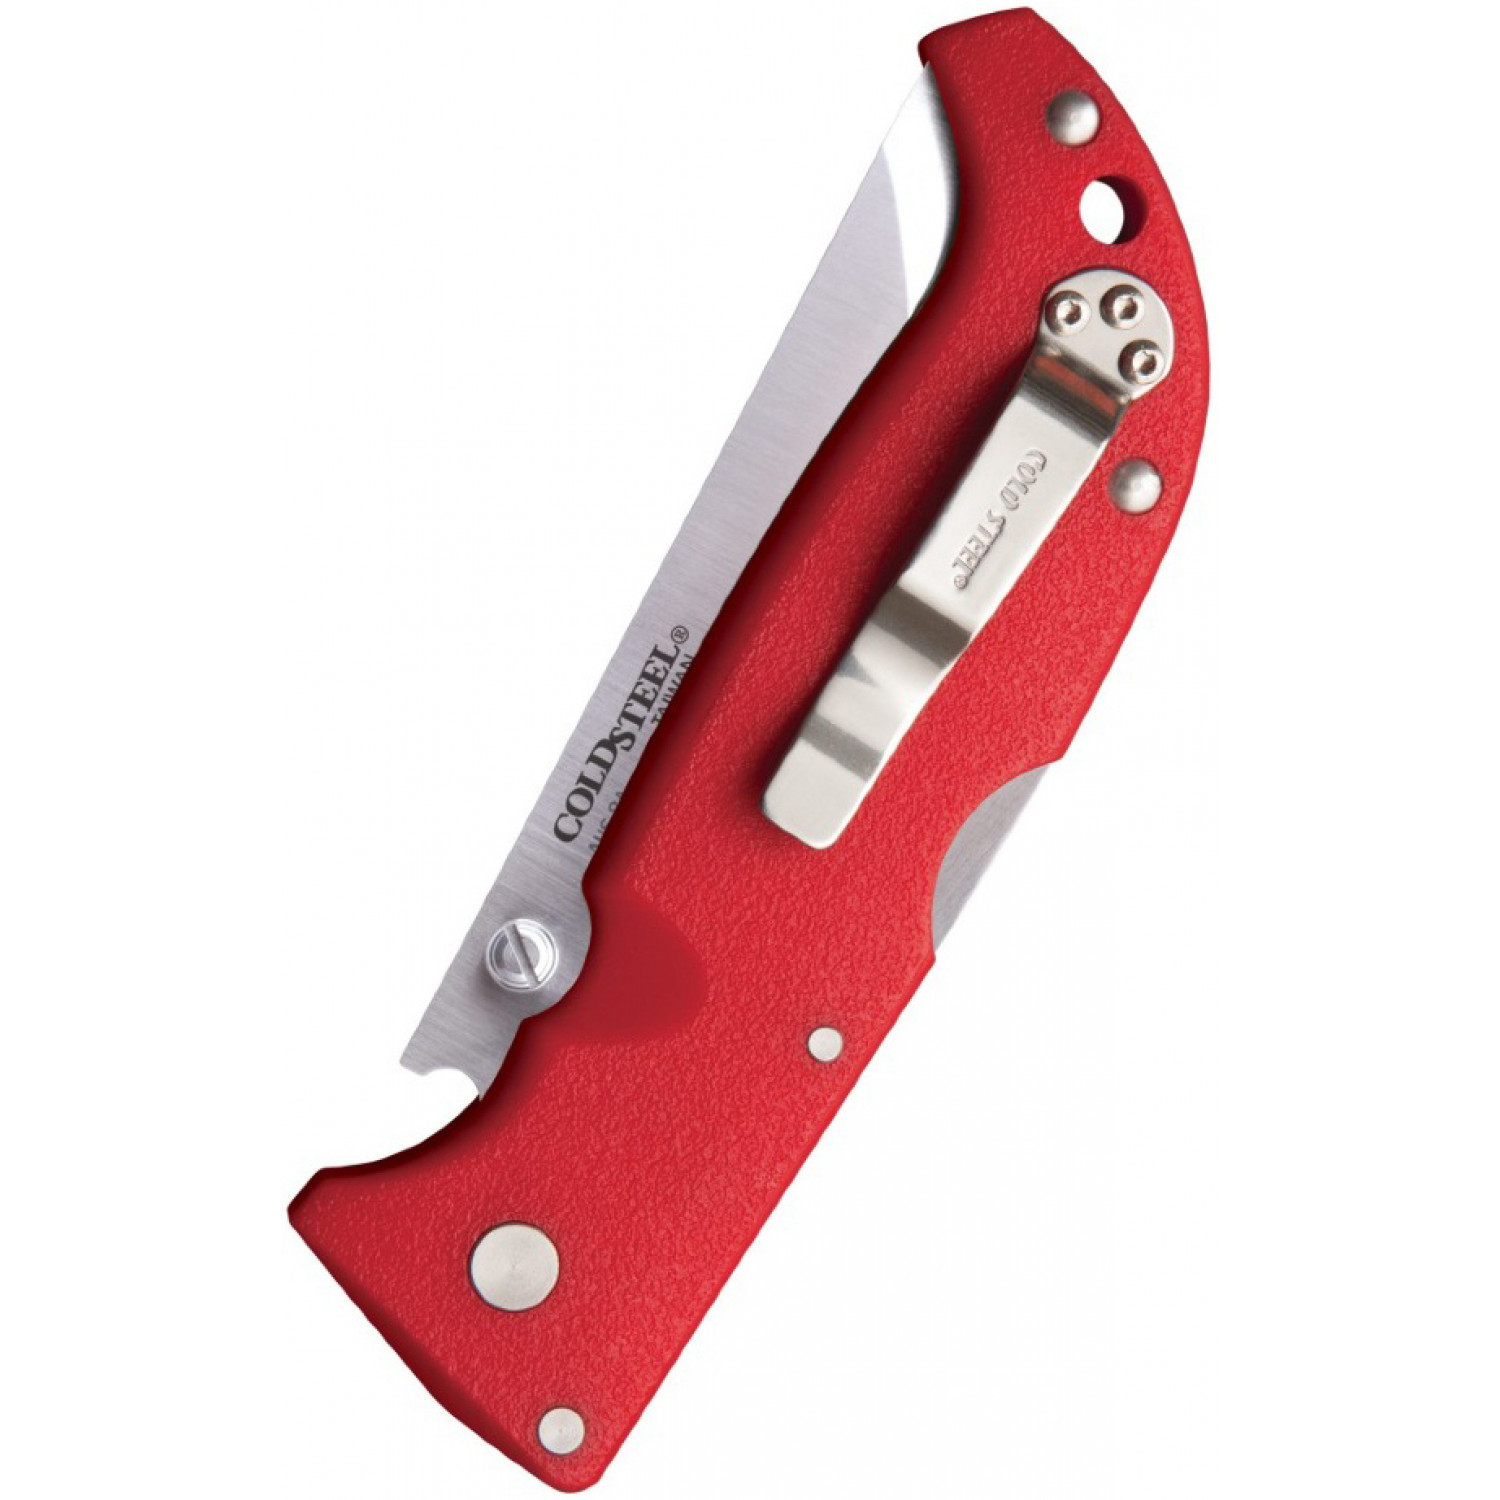 Складной нож Finn Wolf (Red) - Cold Steel 20NPRDZ, сталь AUS 8A, рукоять Grivory® (пластик) - фото 3